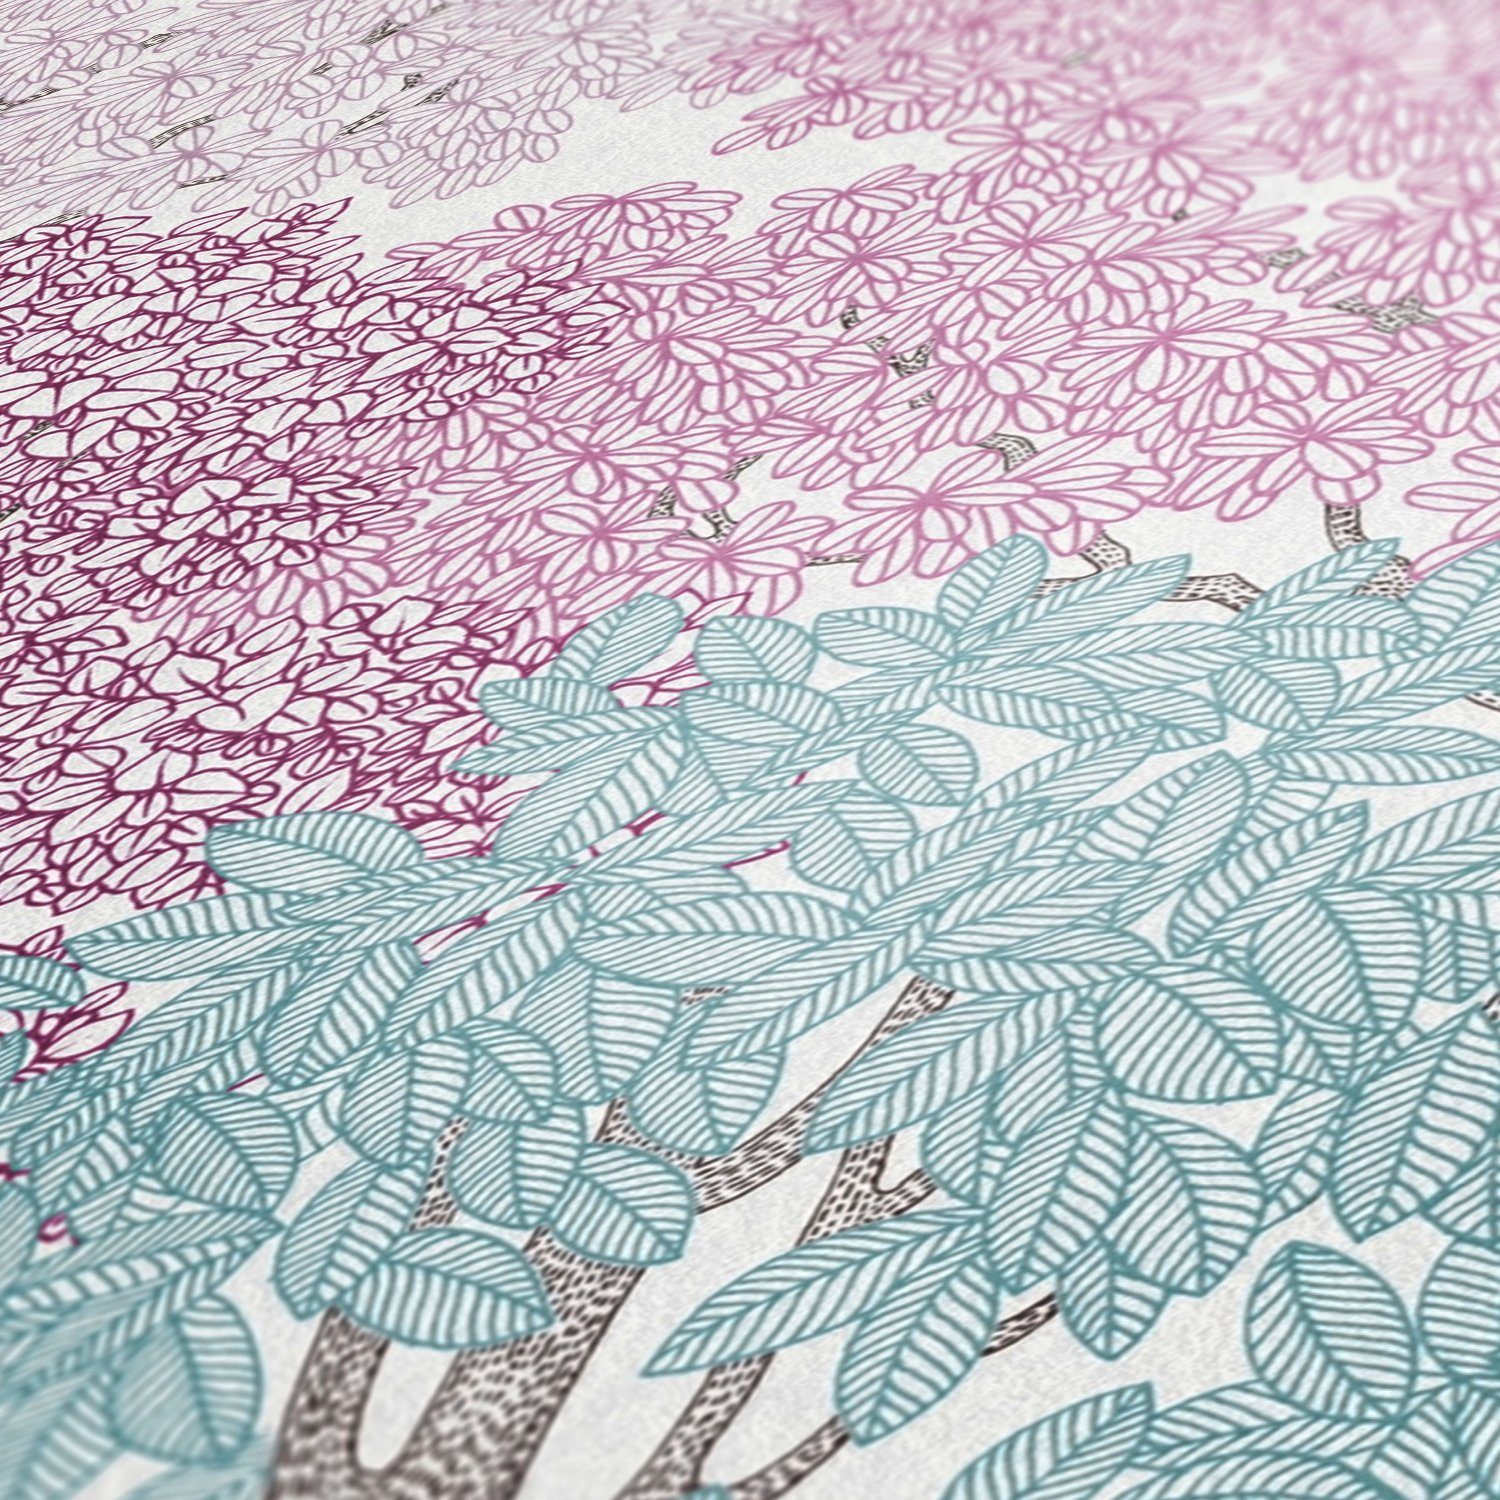 A.S. Création Architects Impression, Wald, Blumentapete Tapete rosa/blau/weiß botanisch, Vliestapete Floral glatt, Wald Paper floral